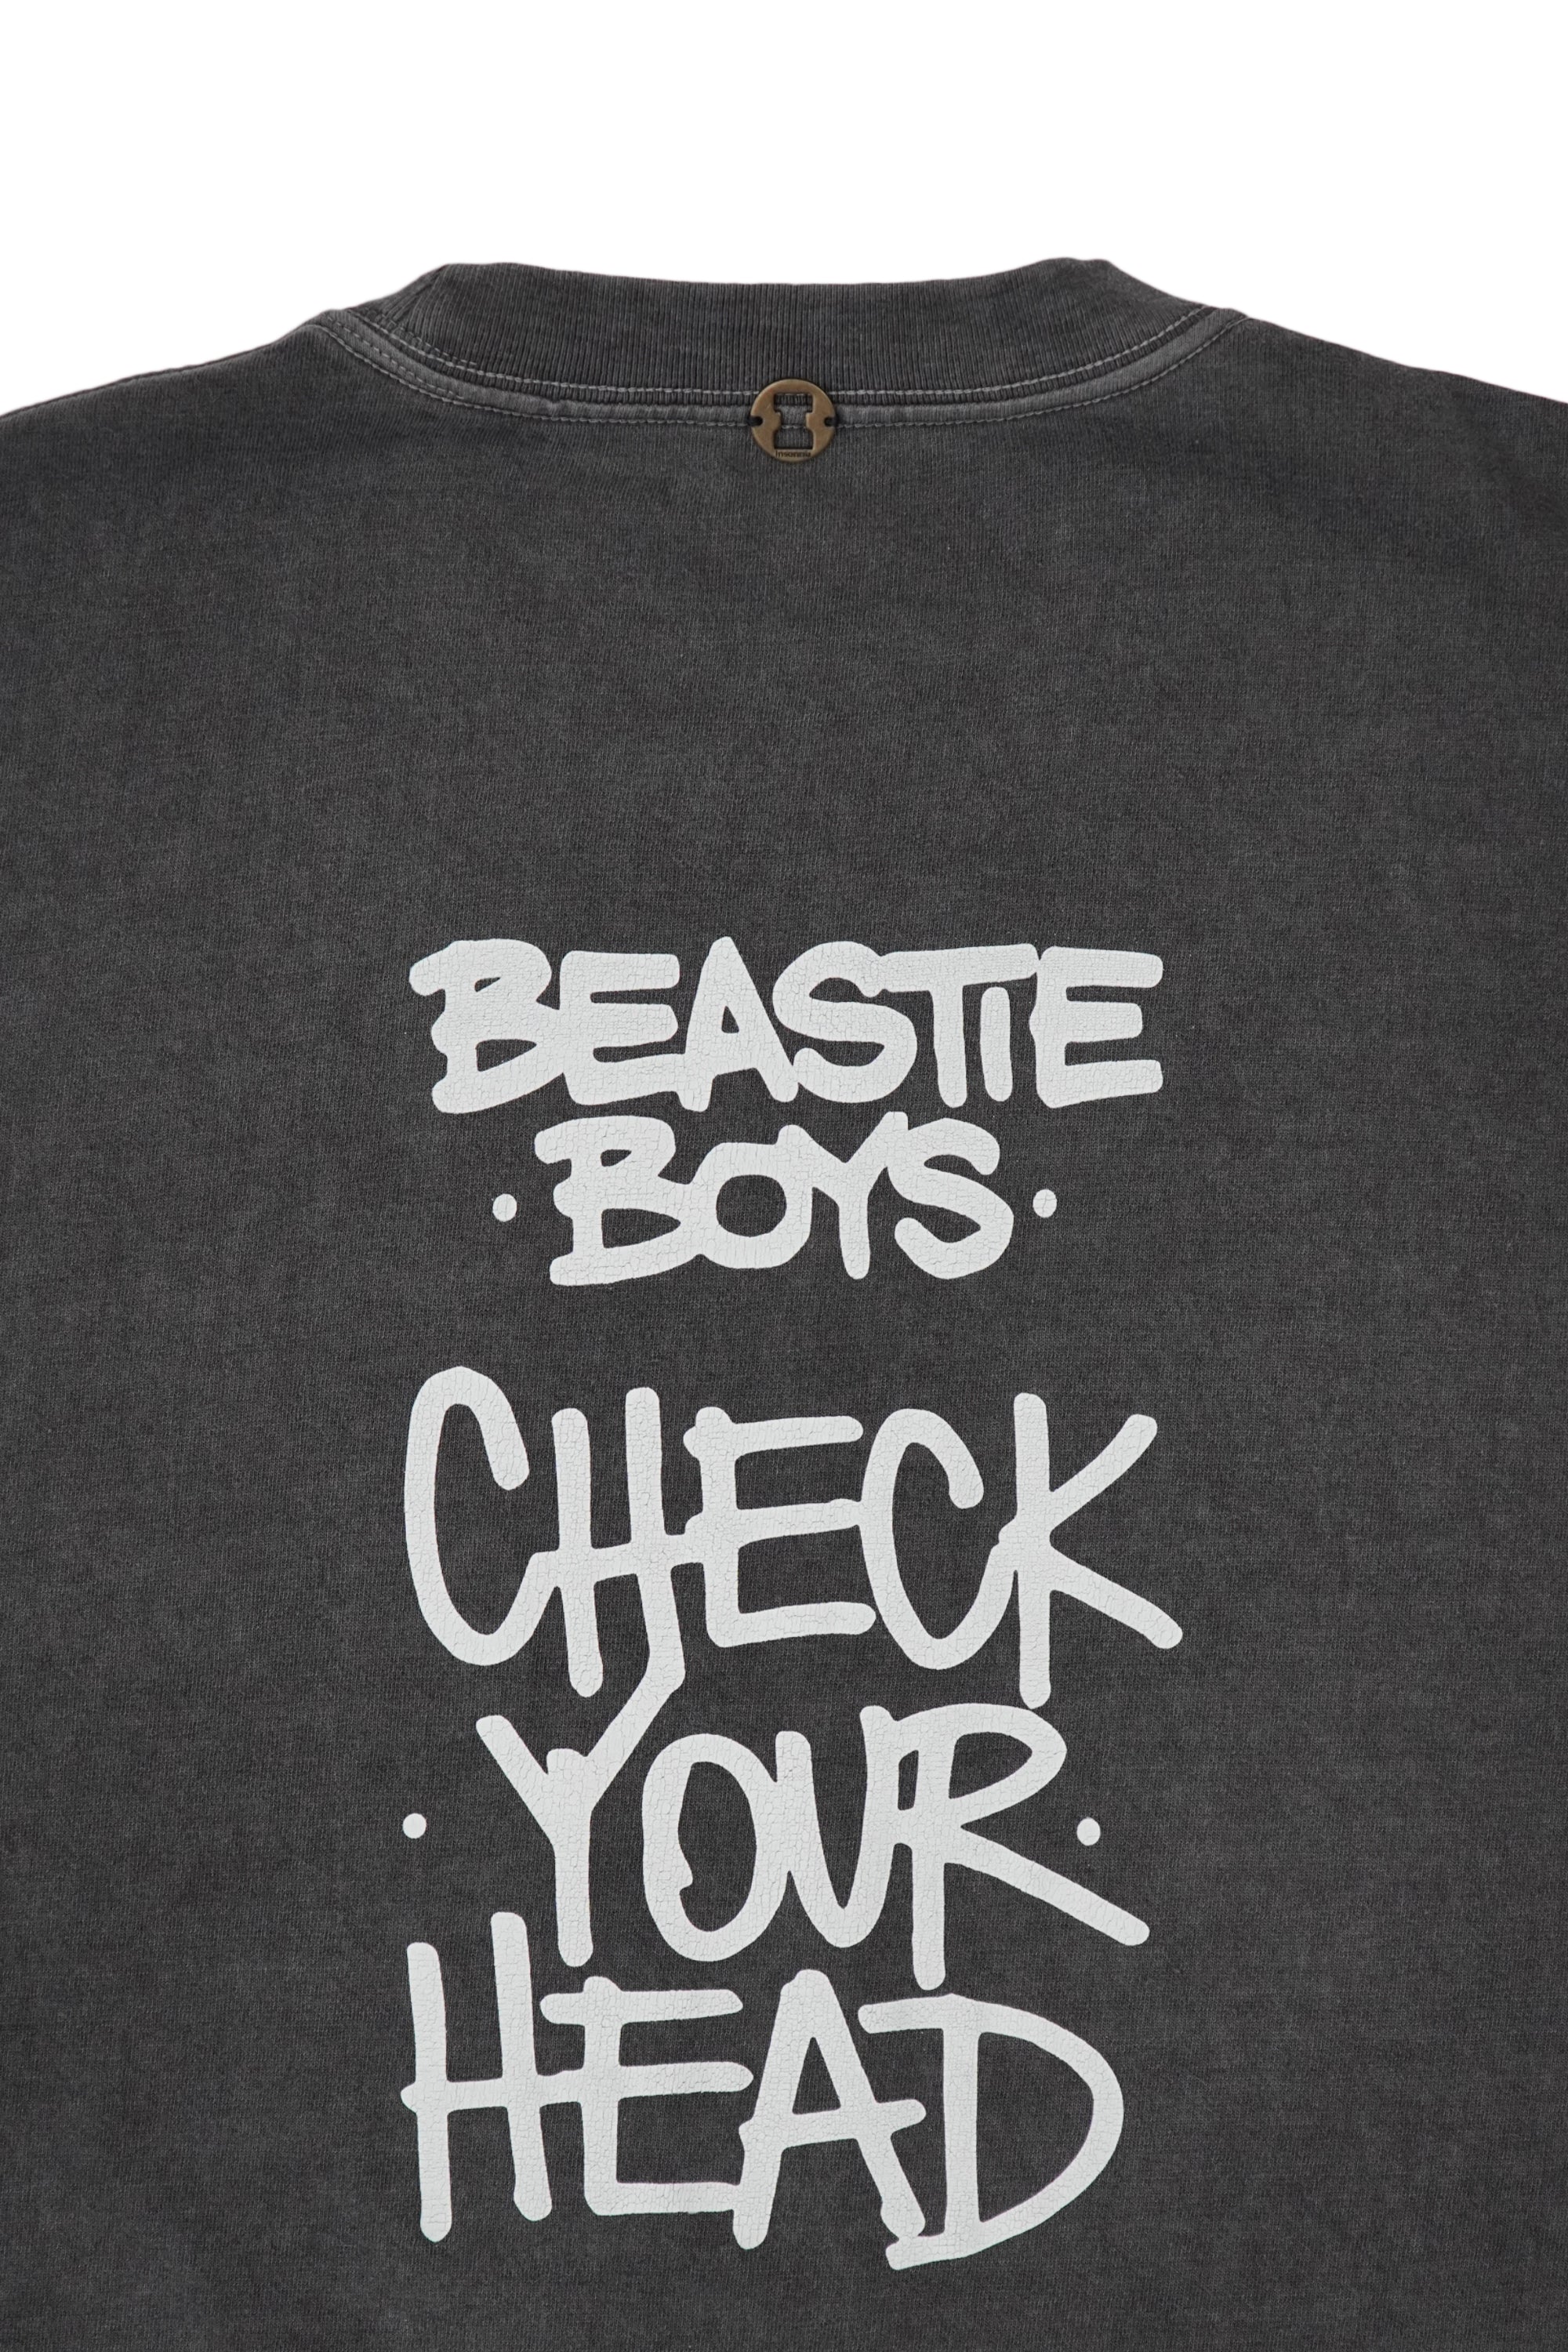 ×BEASTIE BOYS CHECK YOUR HEAD PHOTO TEE